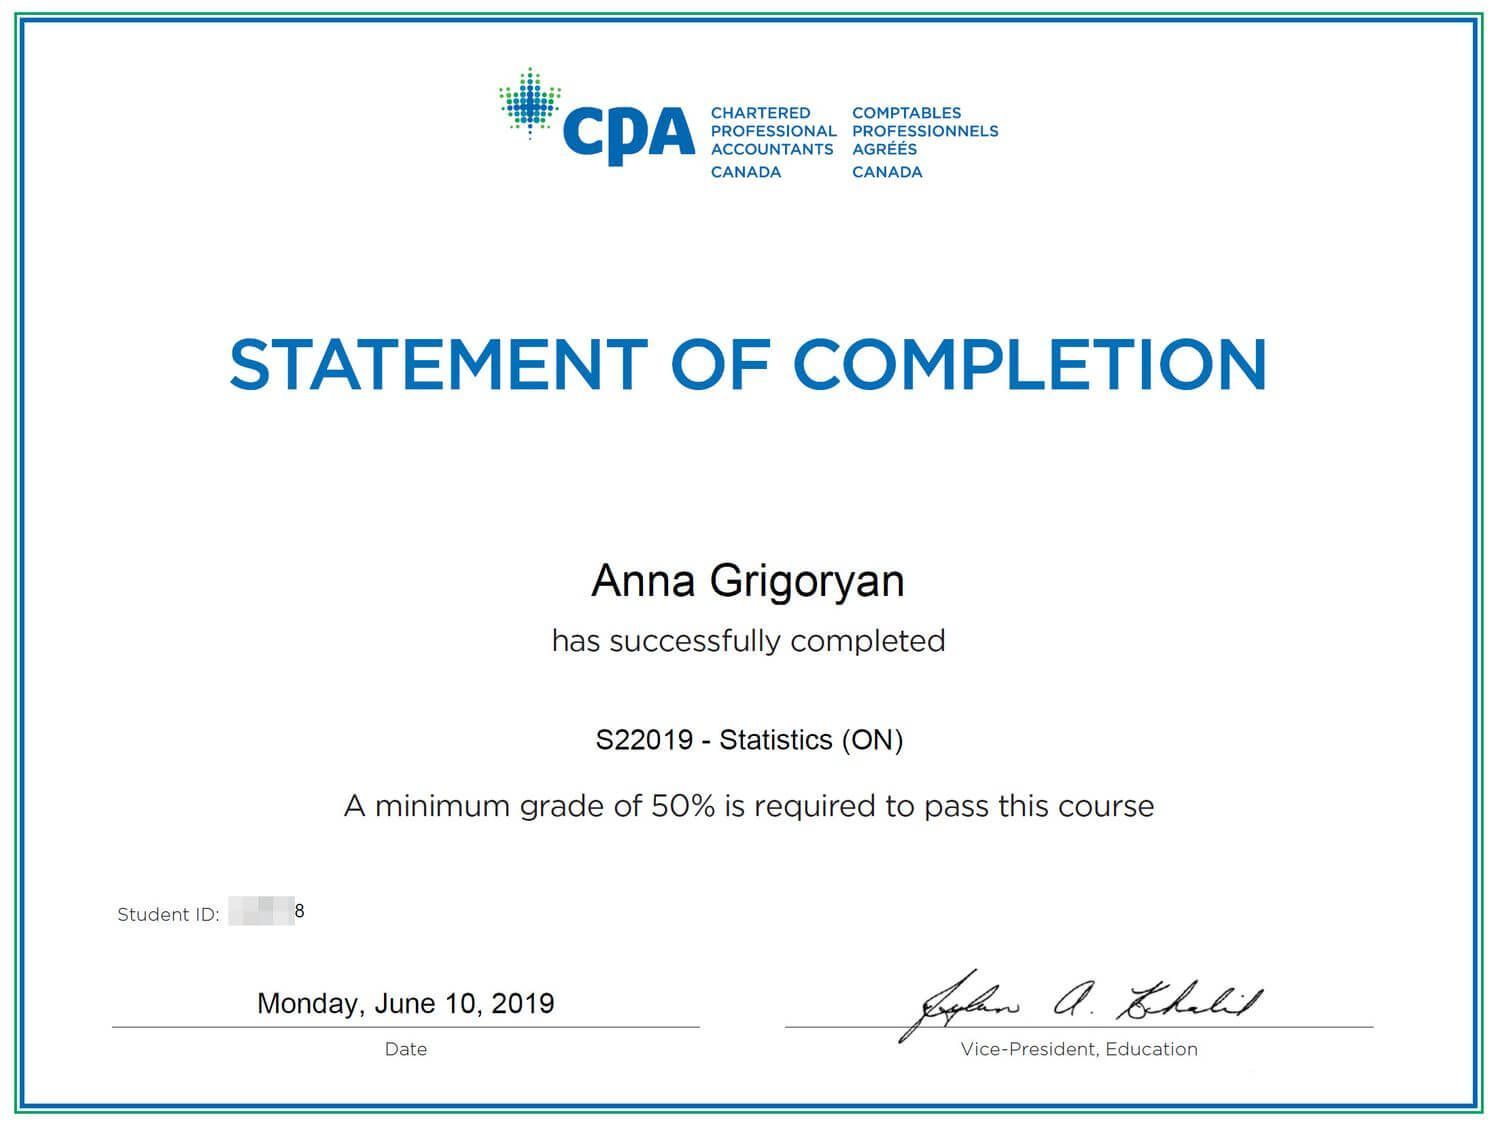 Corporate accountant Anna Grigoryan's CPA certificate - Statistics